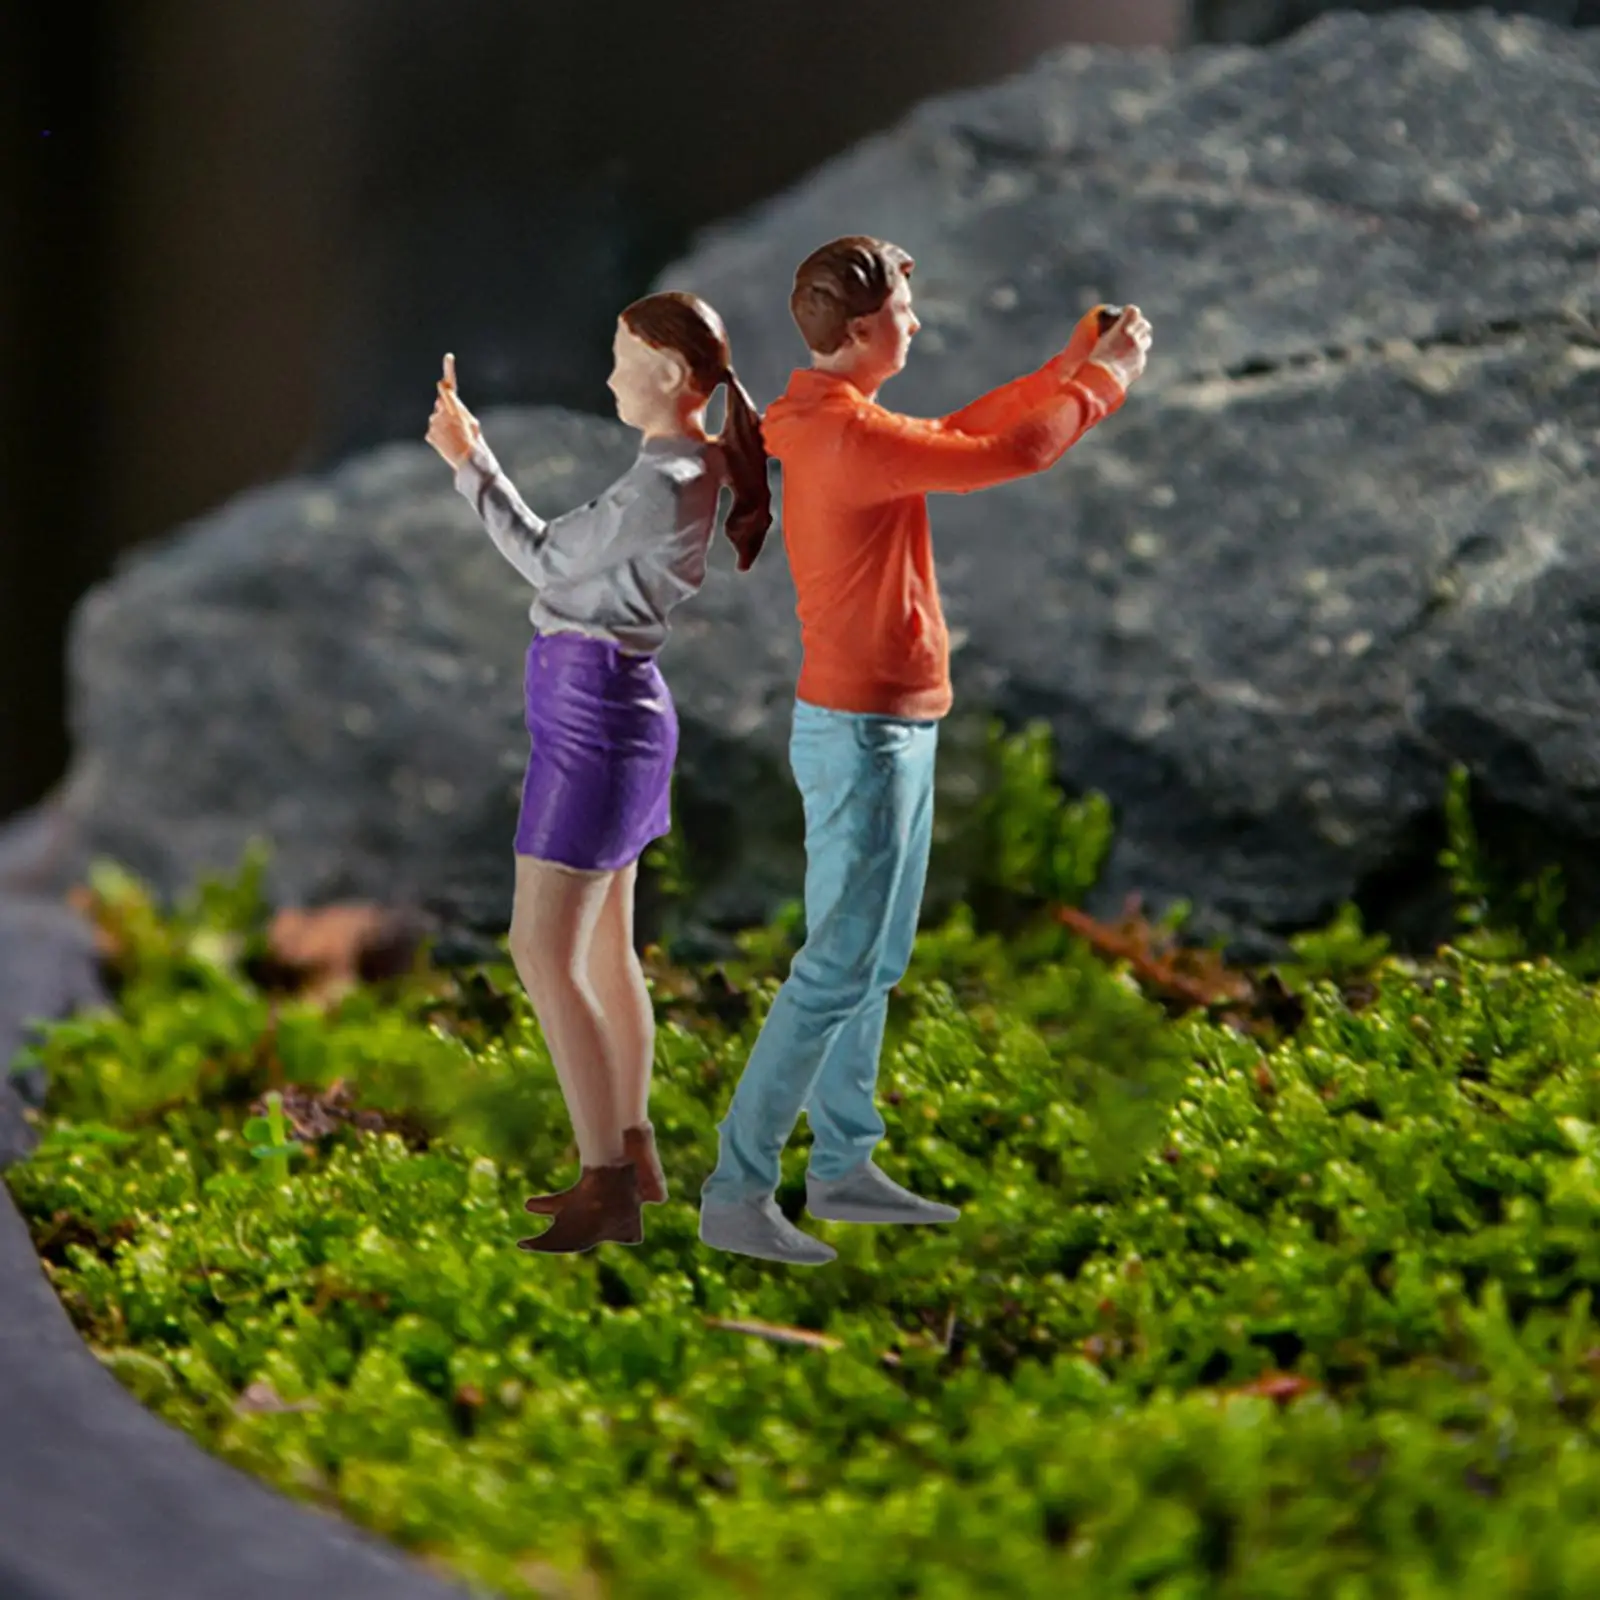 2 Pieces 1/64 Couple Figures Realistic Model Trains People Figures for Diorama Dollhouse Photography Props Miniature Scene Decor